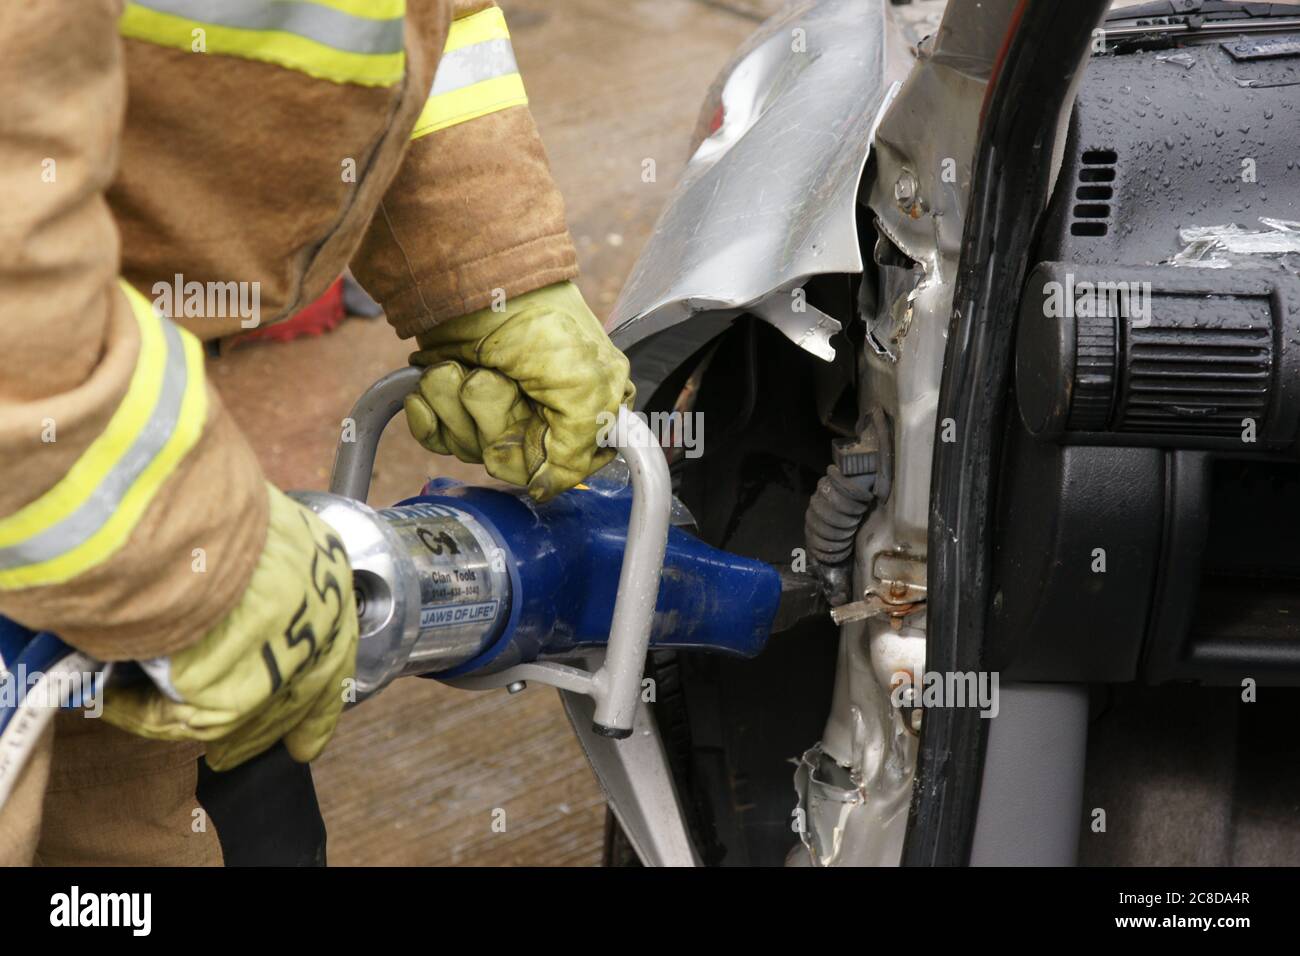 car crash, mechanical entrapment, rescue cutting equipment Stock Photo